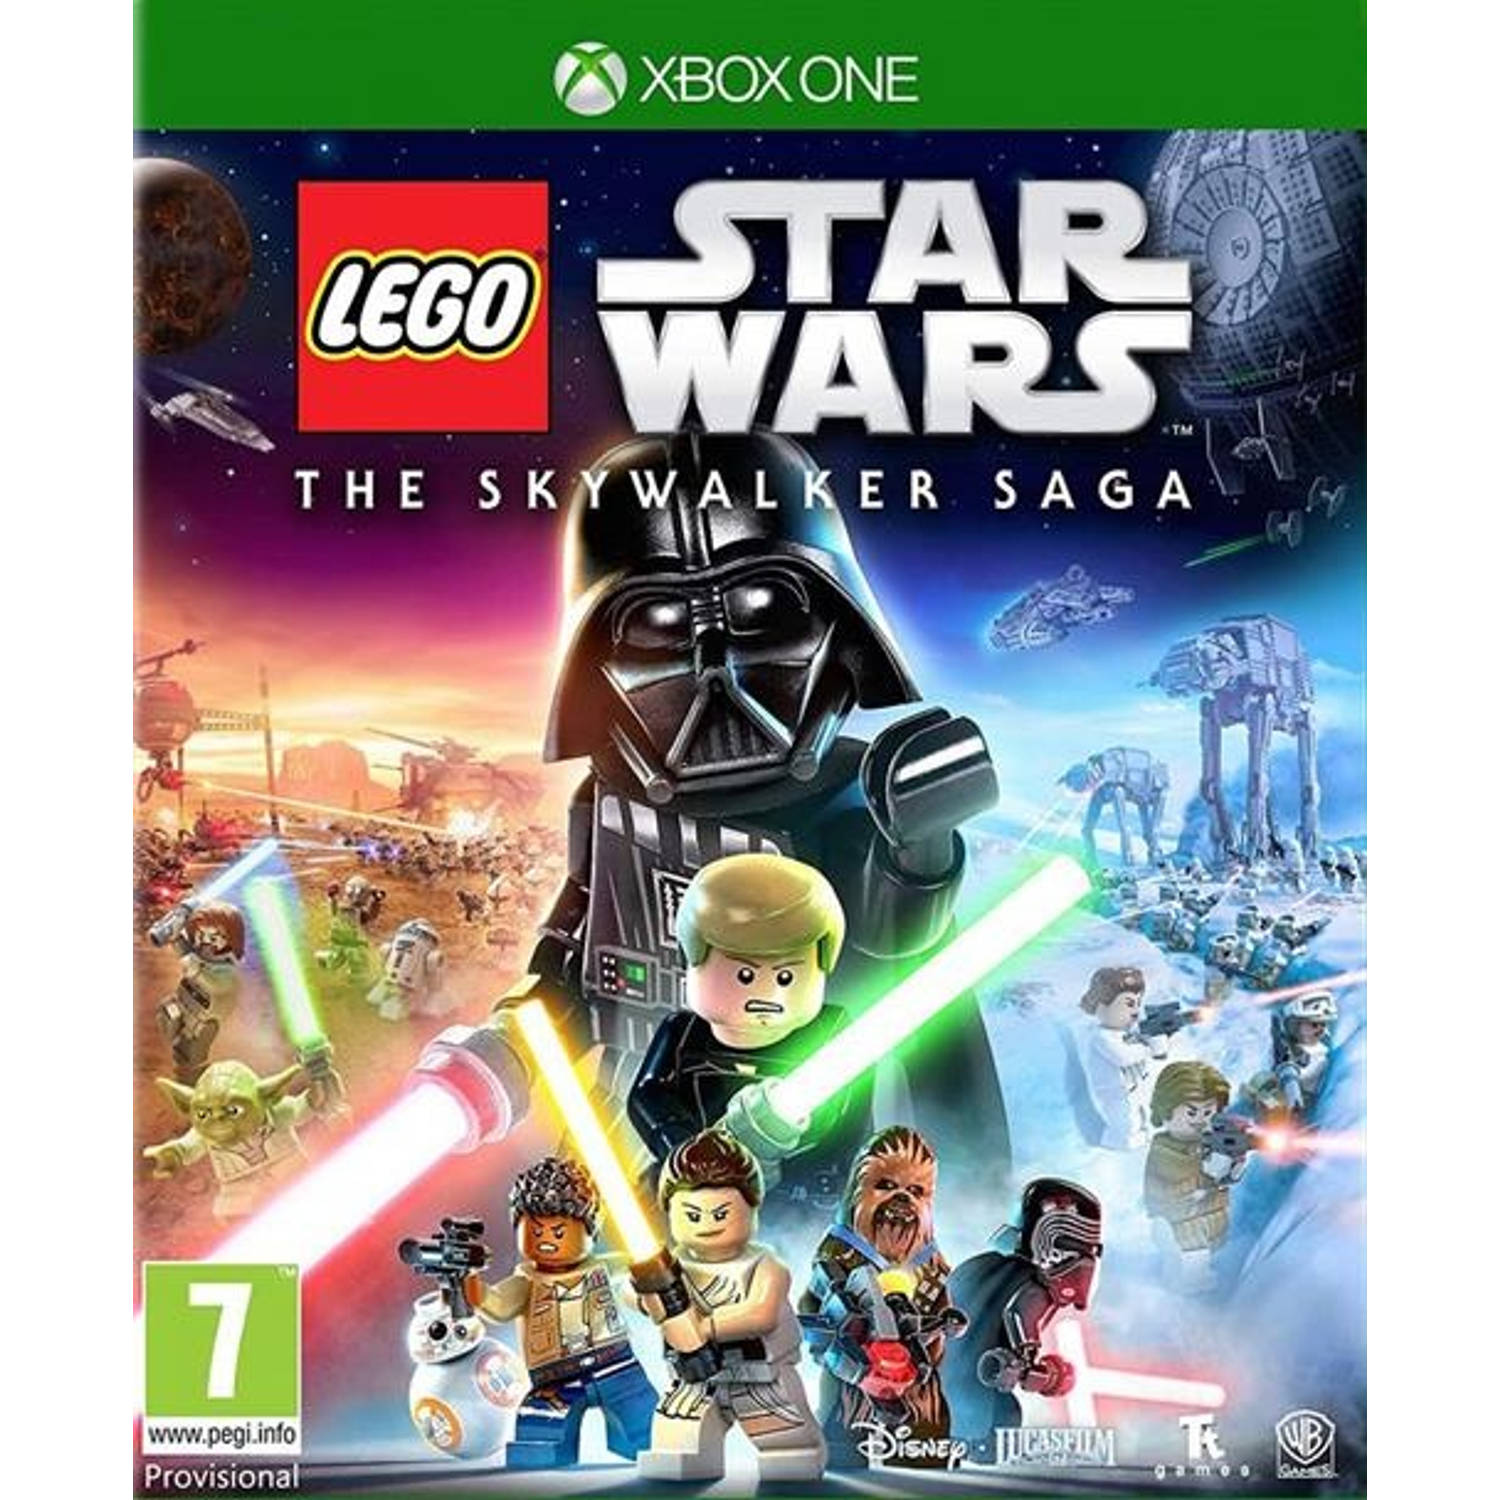 LEGO Star Wars The Skywalker saga, (X-Box One). XBOXONE